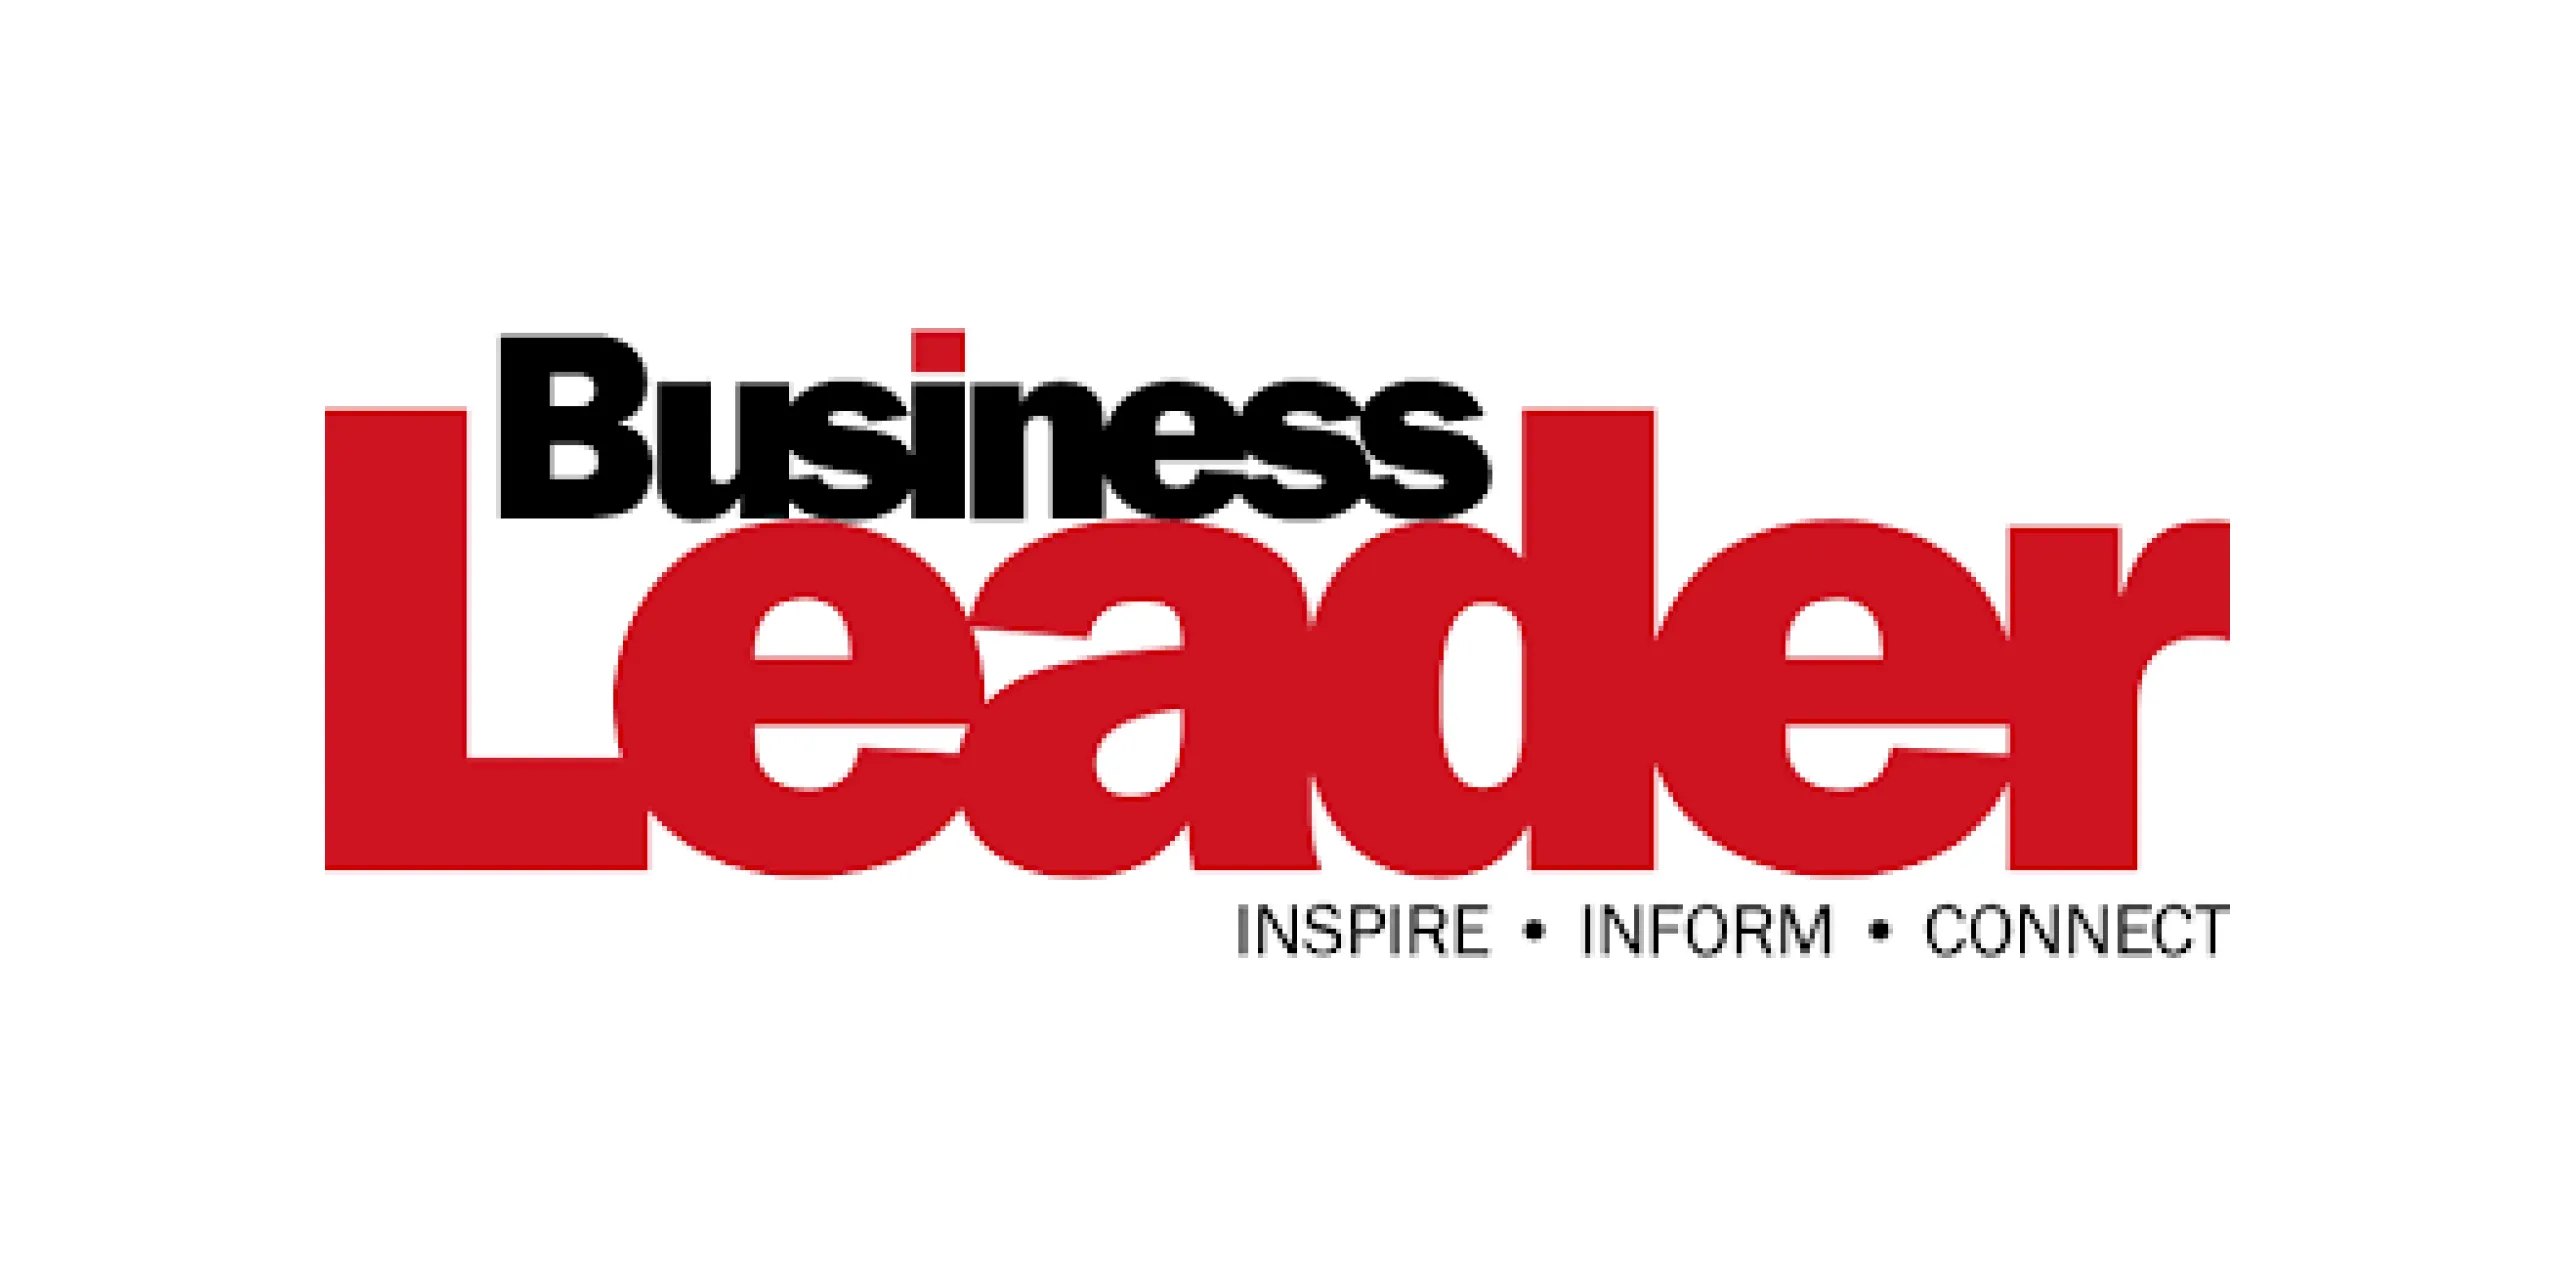 Business Leader logo